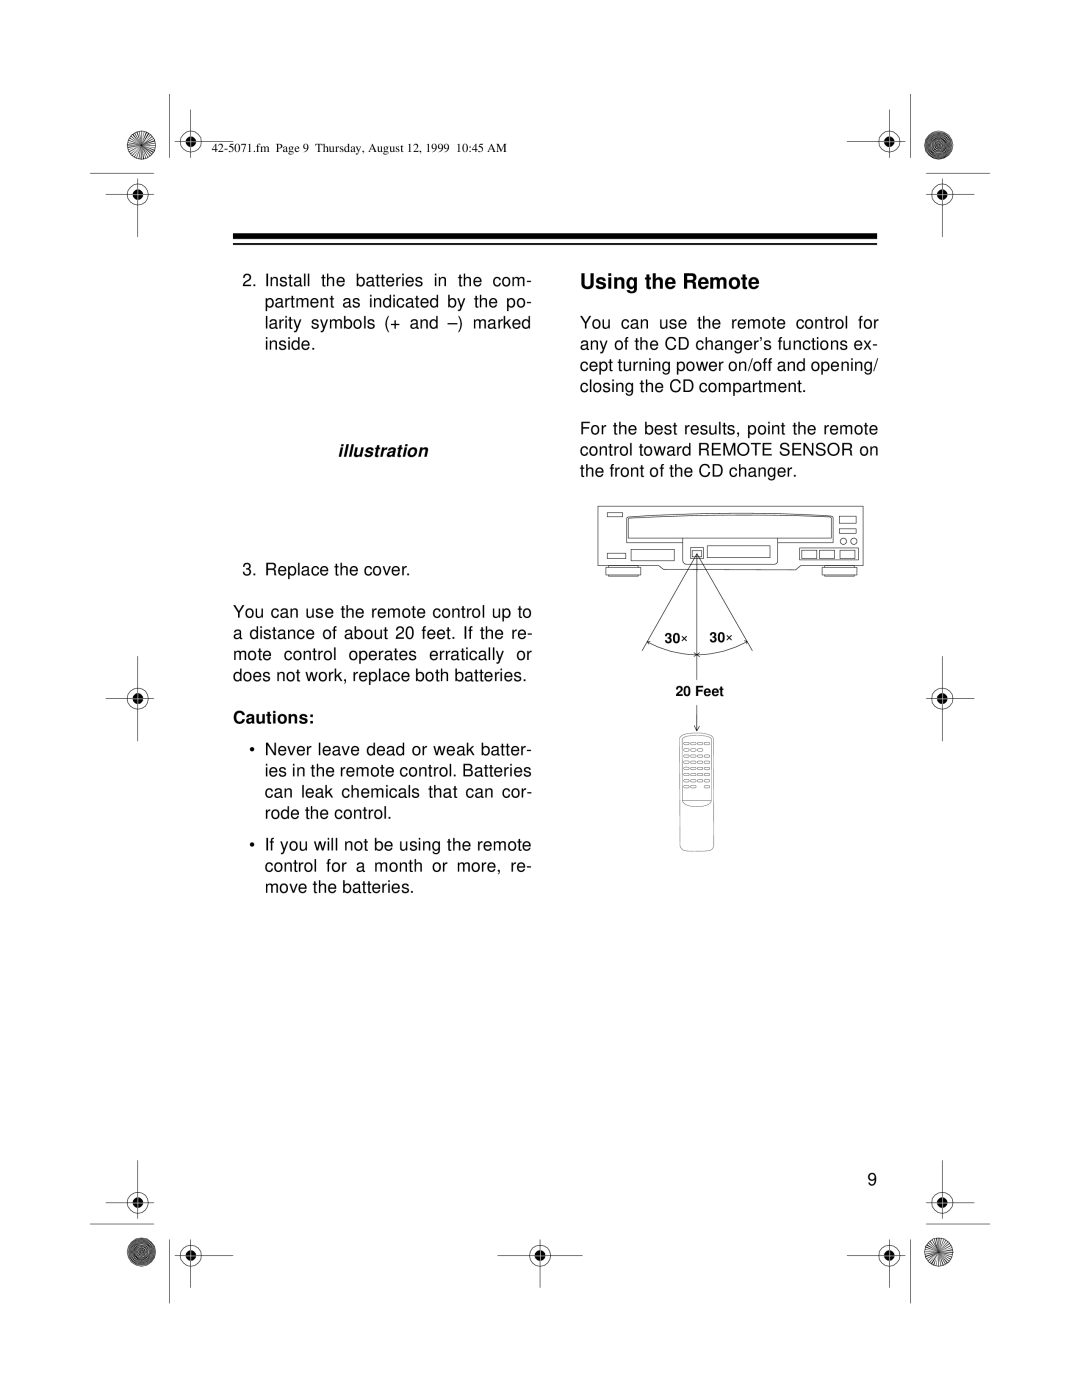 Radio Shack CD-8150 owner manual Using the Remote, illustration 